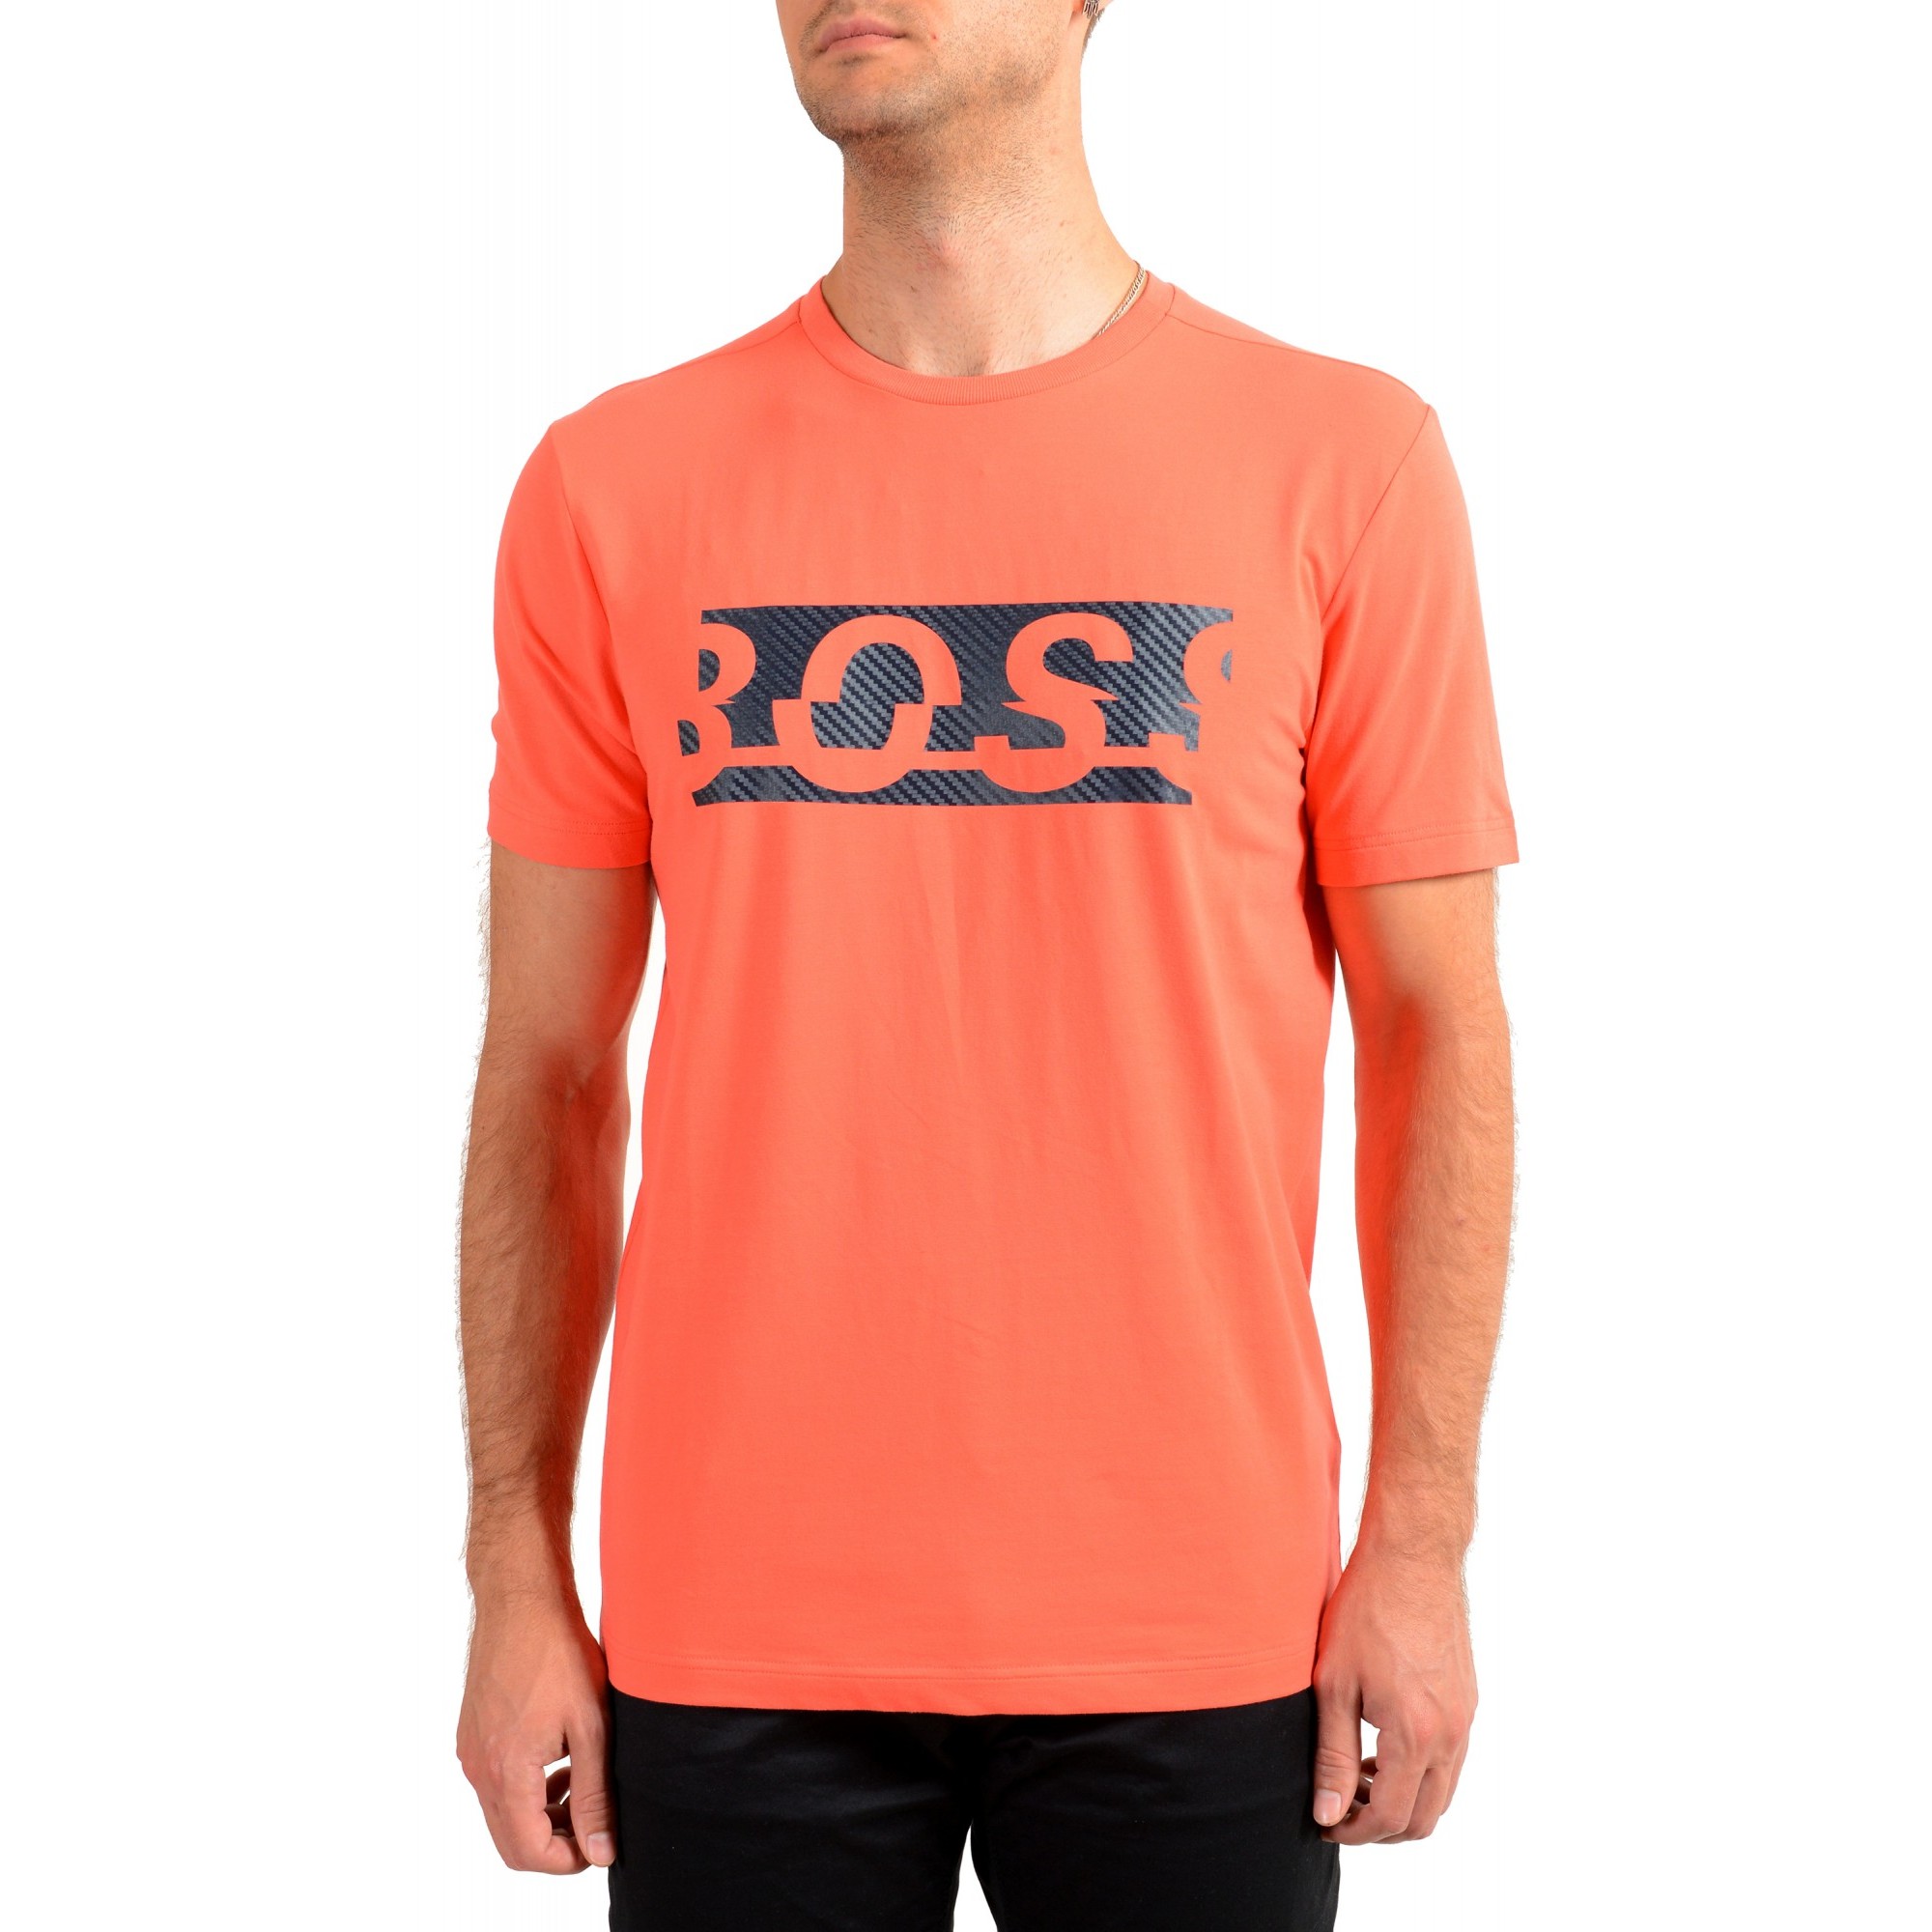 Hugo Boss Mens Tee 6 Fashion T-Shirts 95% Cotton 5% Elastane